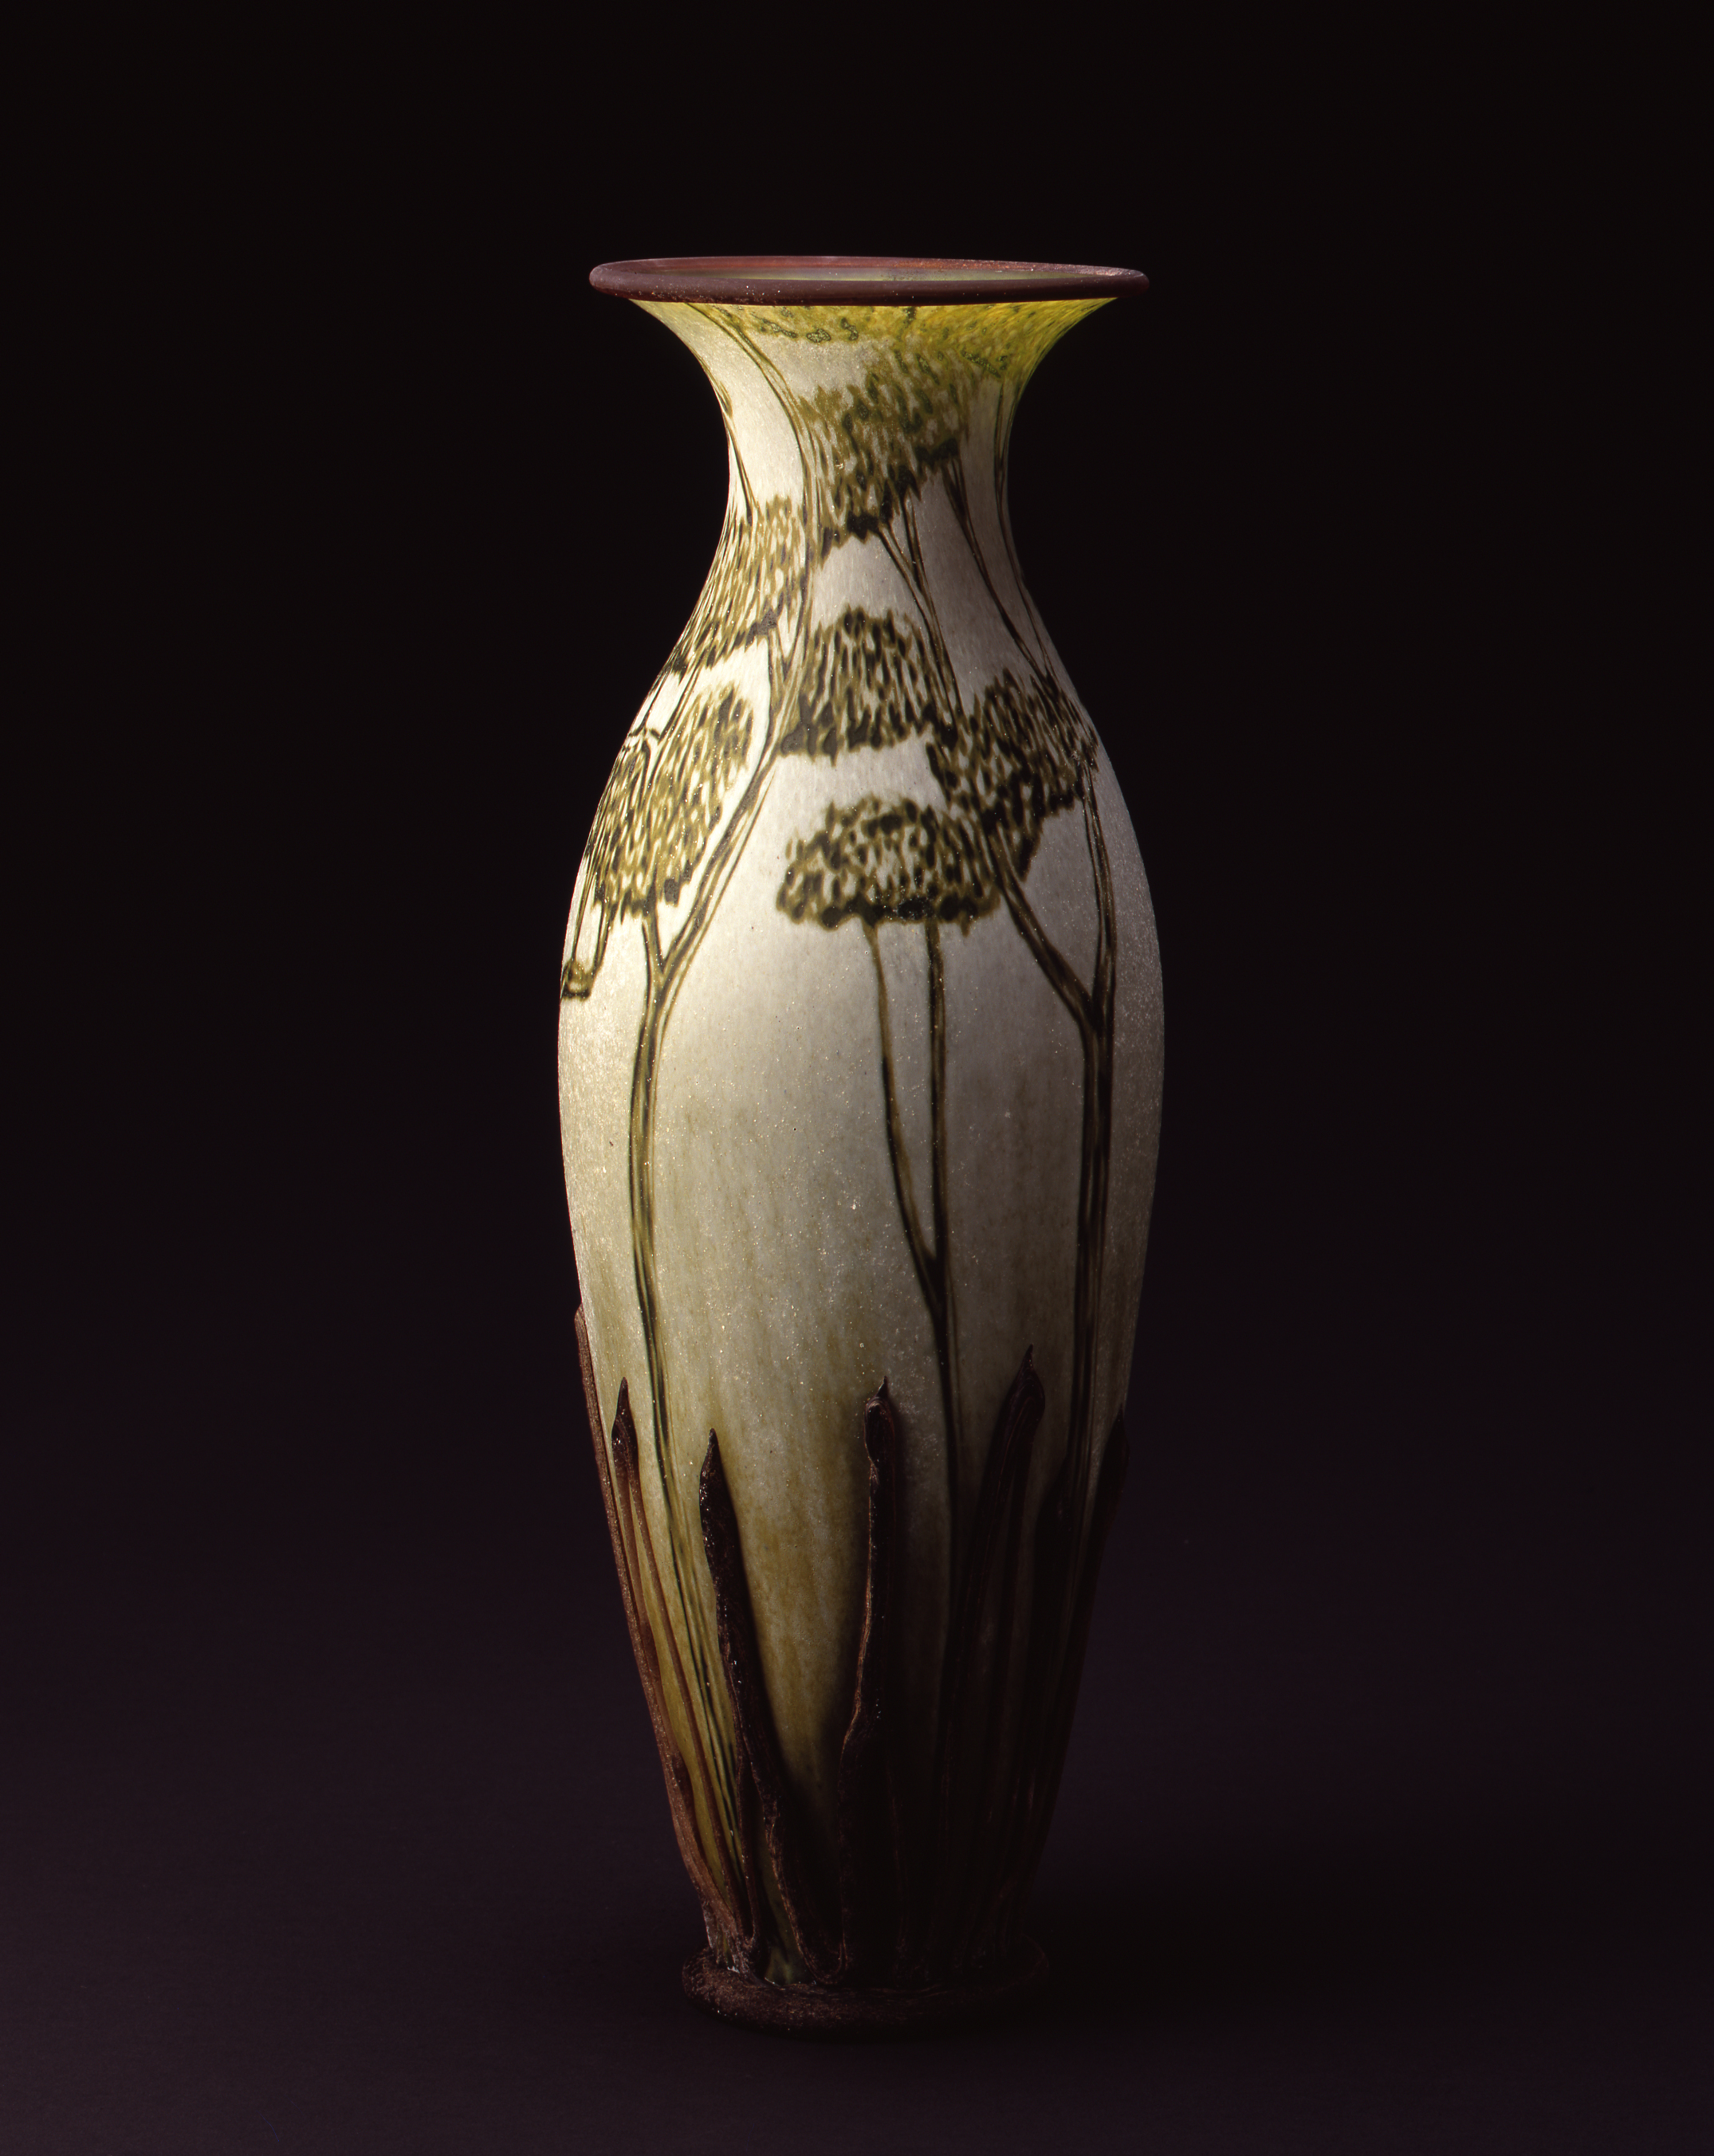  William Morris,&nbsp; Vase with Trees and Pods&nbsp; (2004, glass, 18 1/4 x 6 3/8 x 6 3/8&nbsp;inches), WM.26 